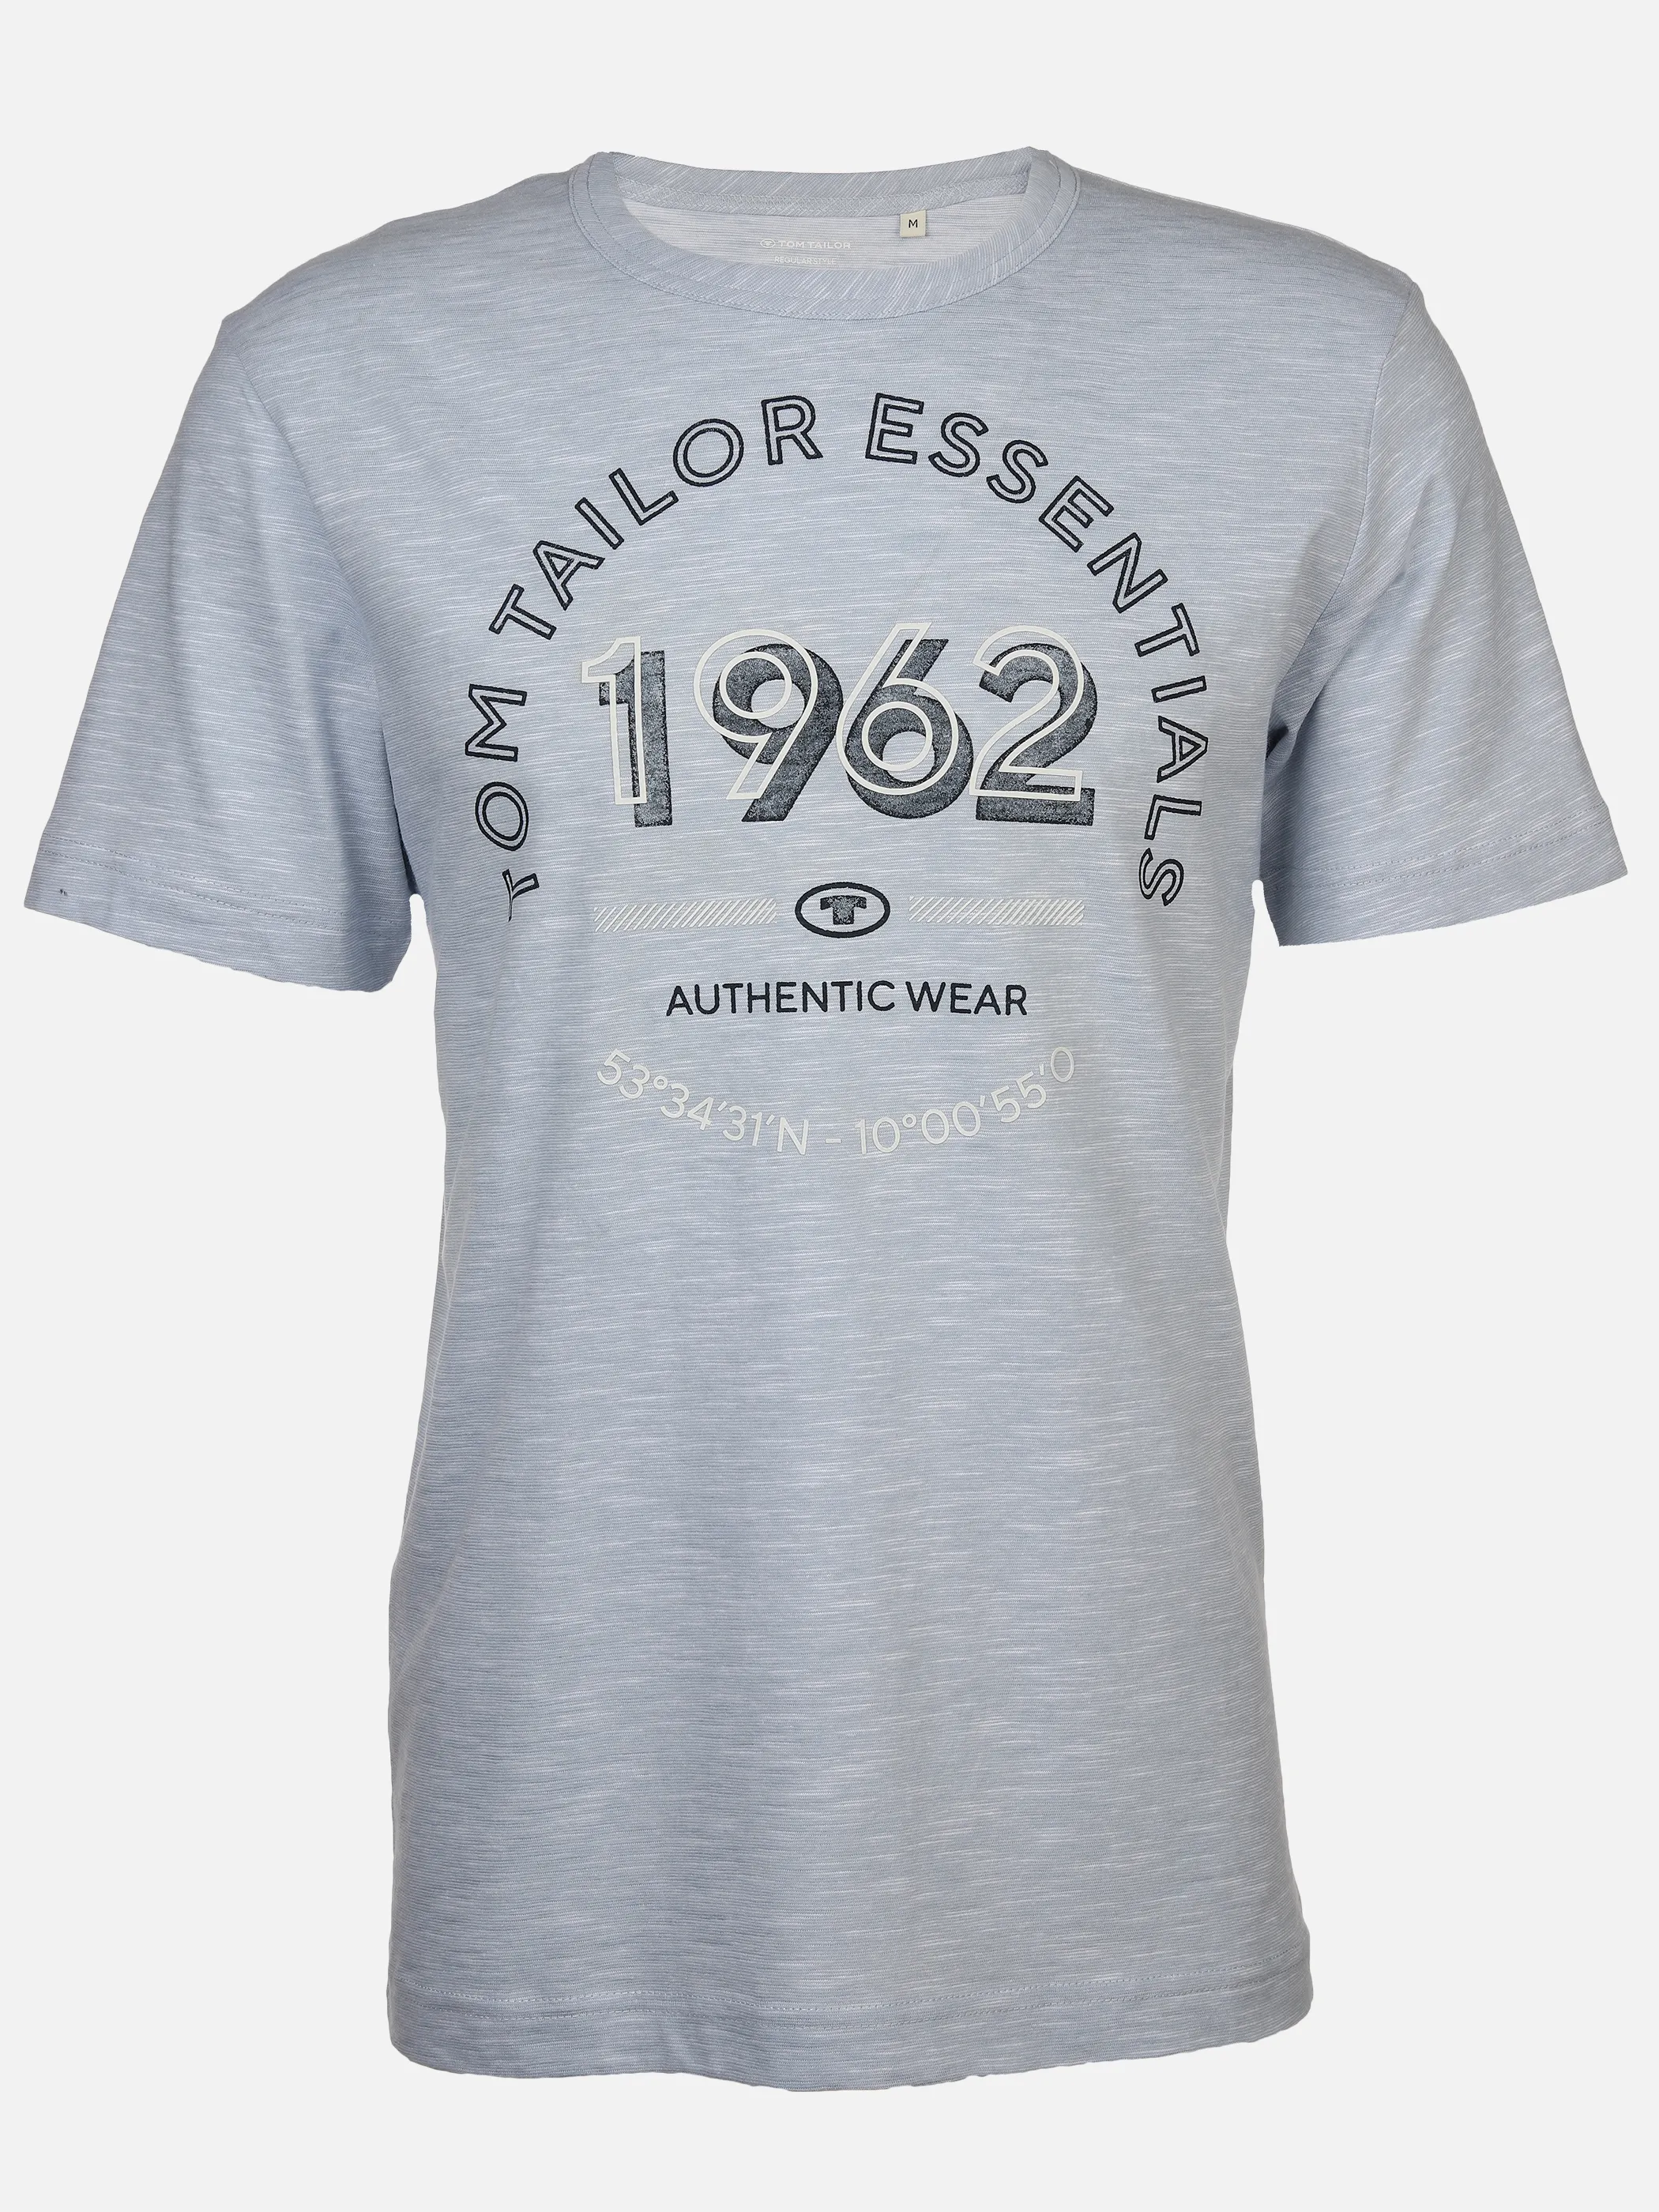 Tom Tailor 1040819 NOS printed t-shirt fine stripe Blau 890934 34964 1